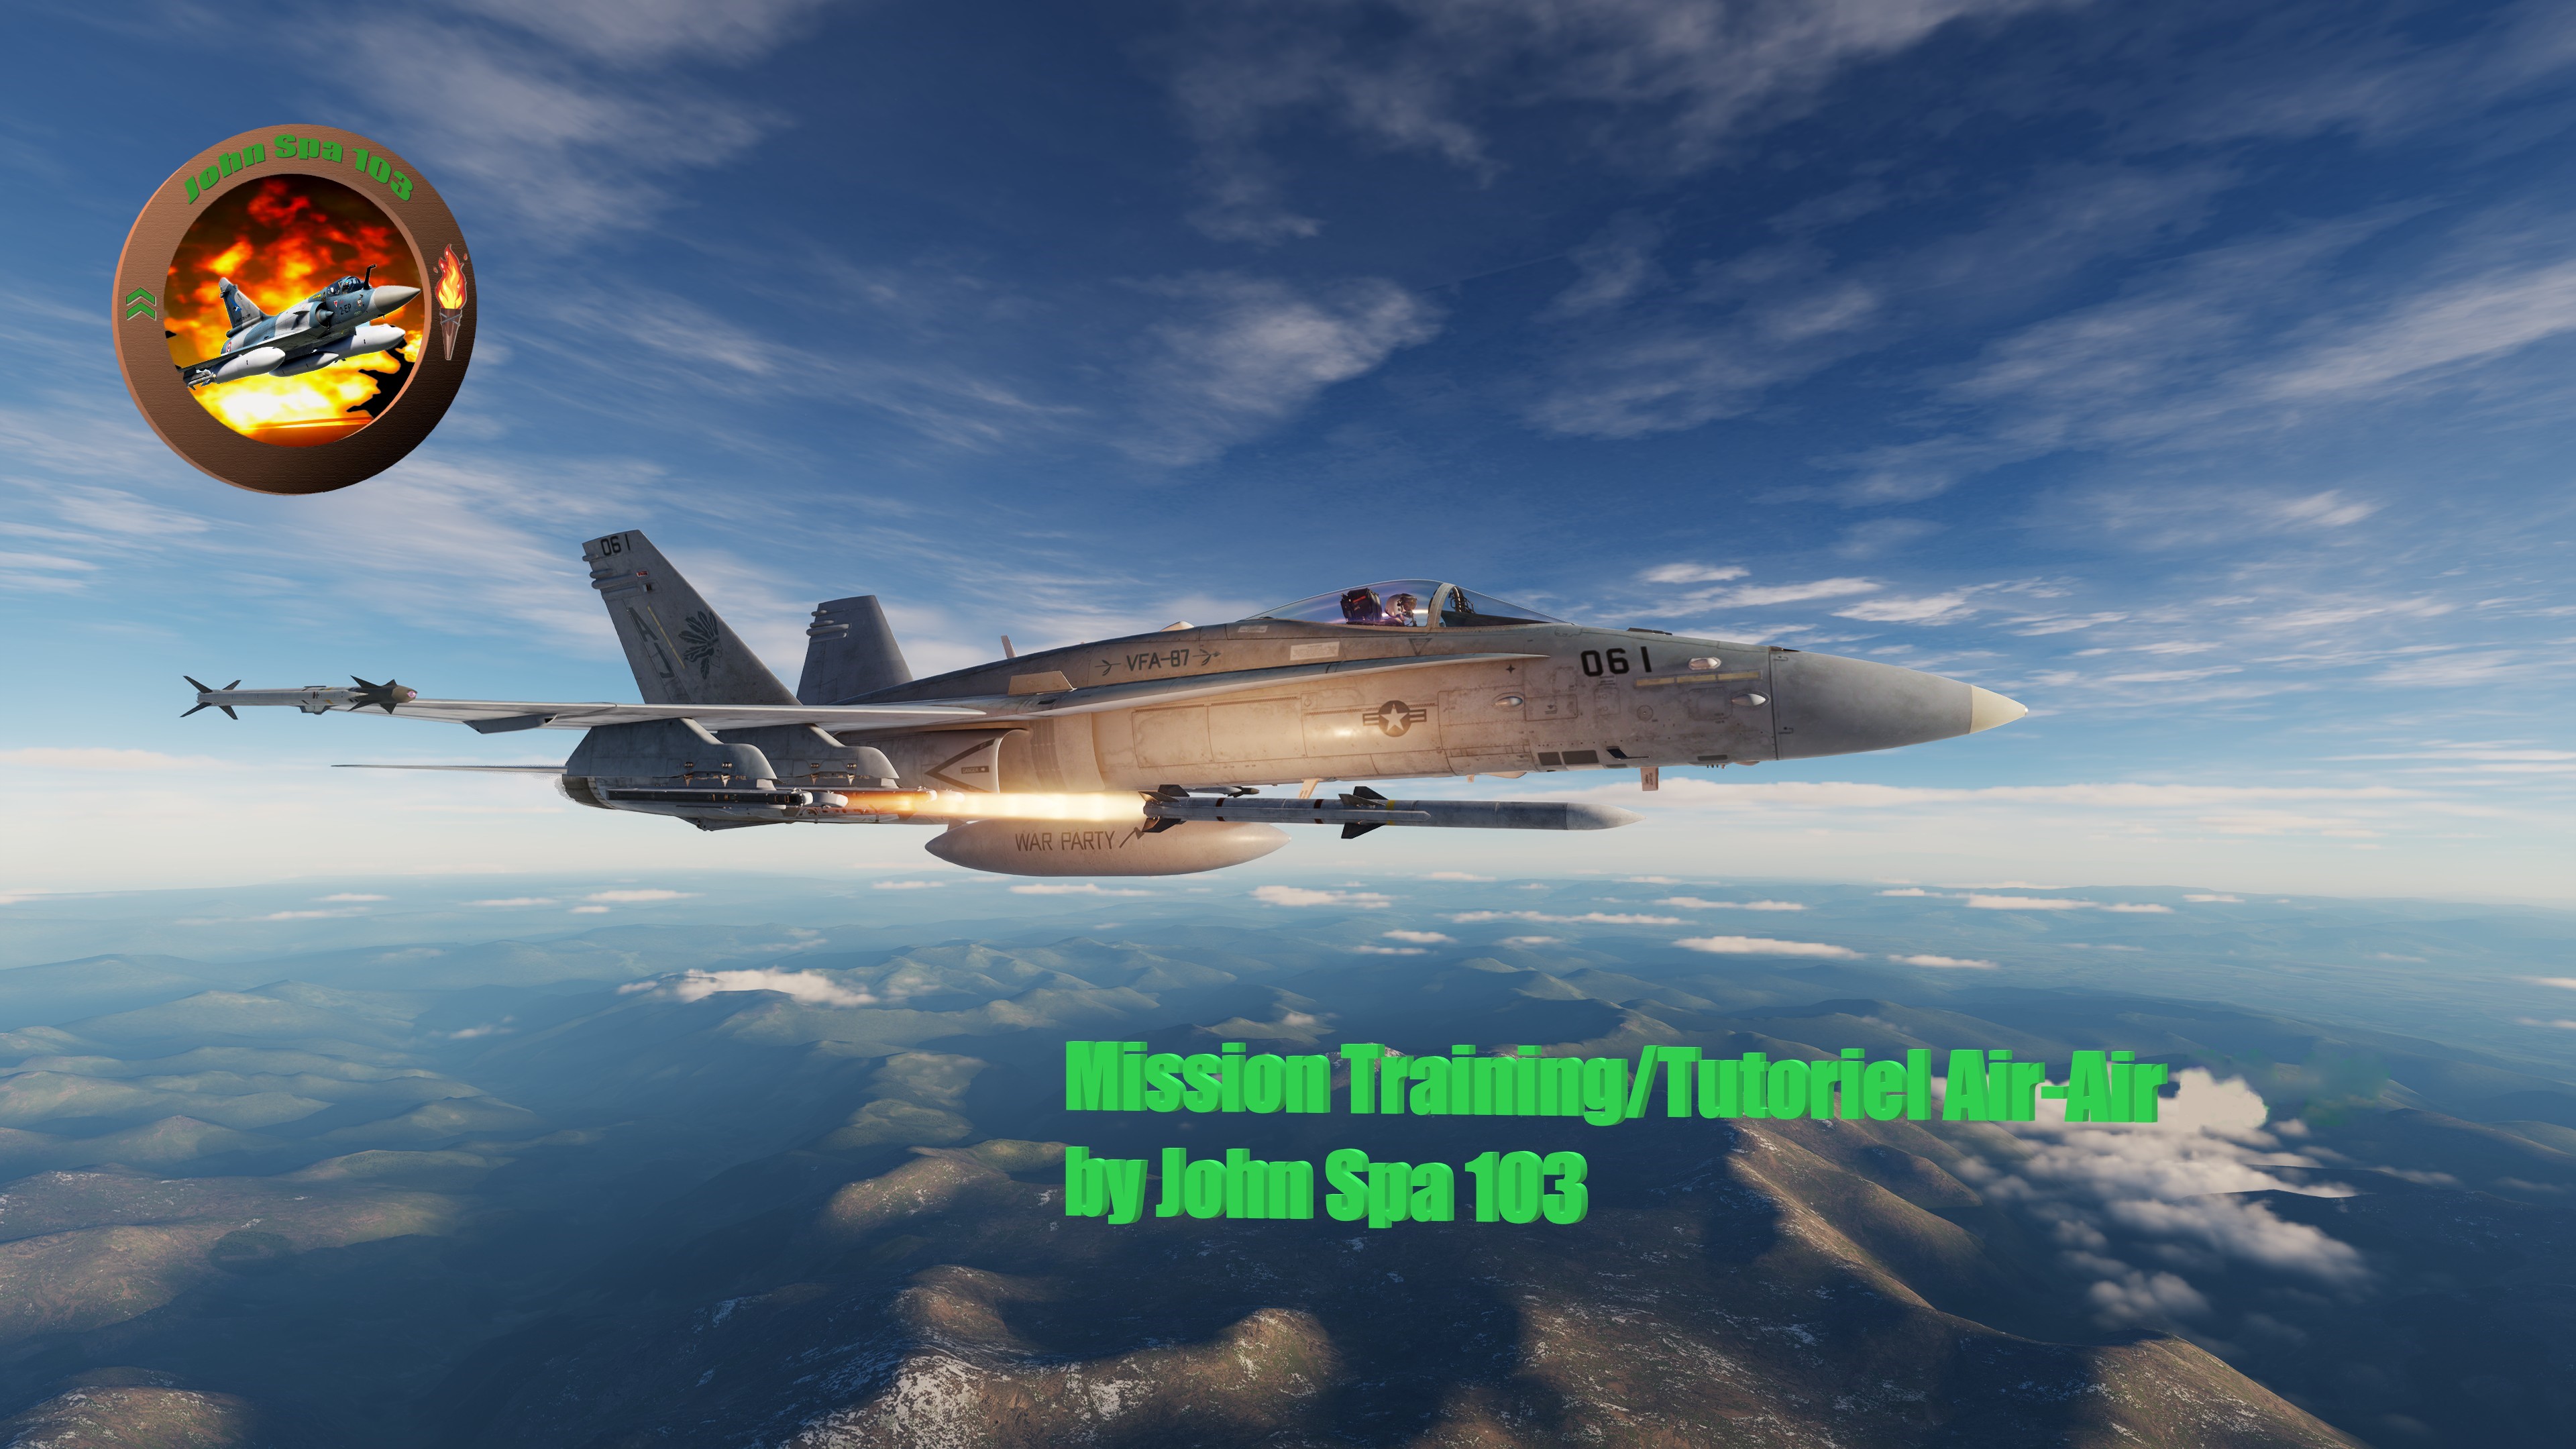 Mission Tutoriel/Training F/A-18C en AIR-AIR